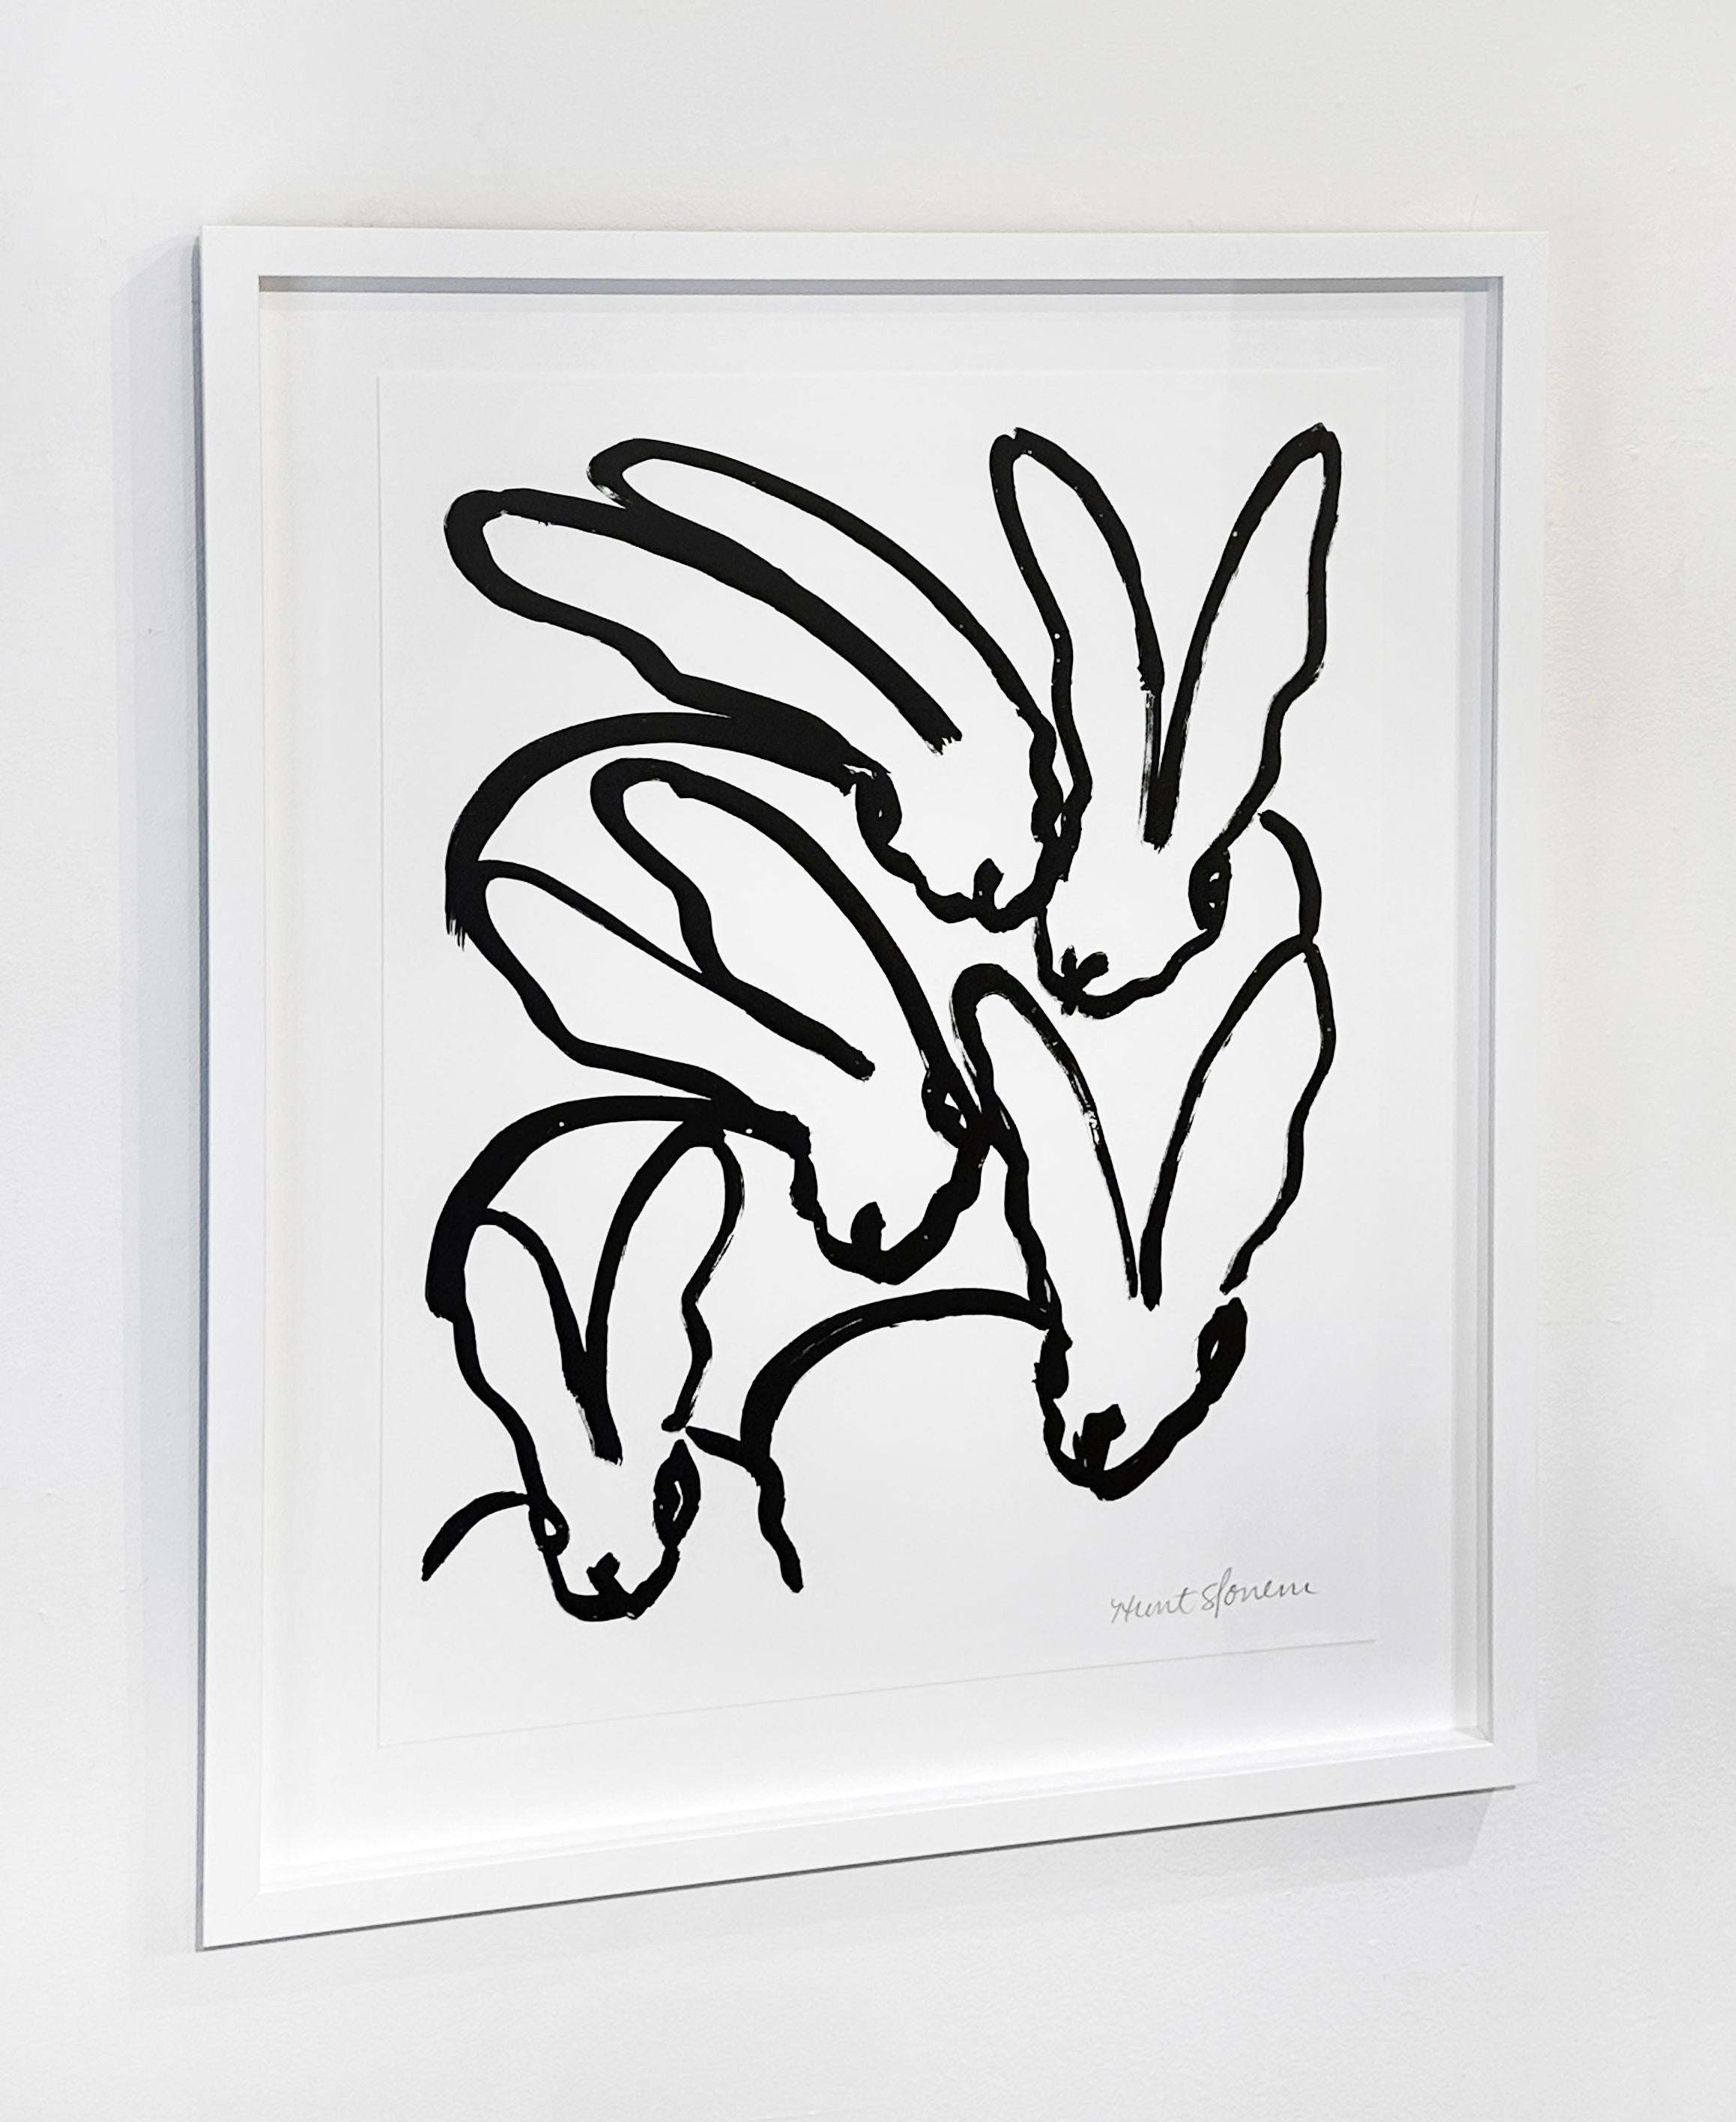 Artist:  Slonem, Hunt
Title:  White Bunnies VI
Series:  Bunnies
Date:  2017
Medium:  Lithograph on Paper
Unframed Dimensions:  24